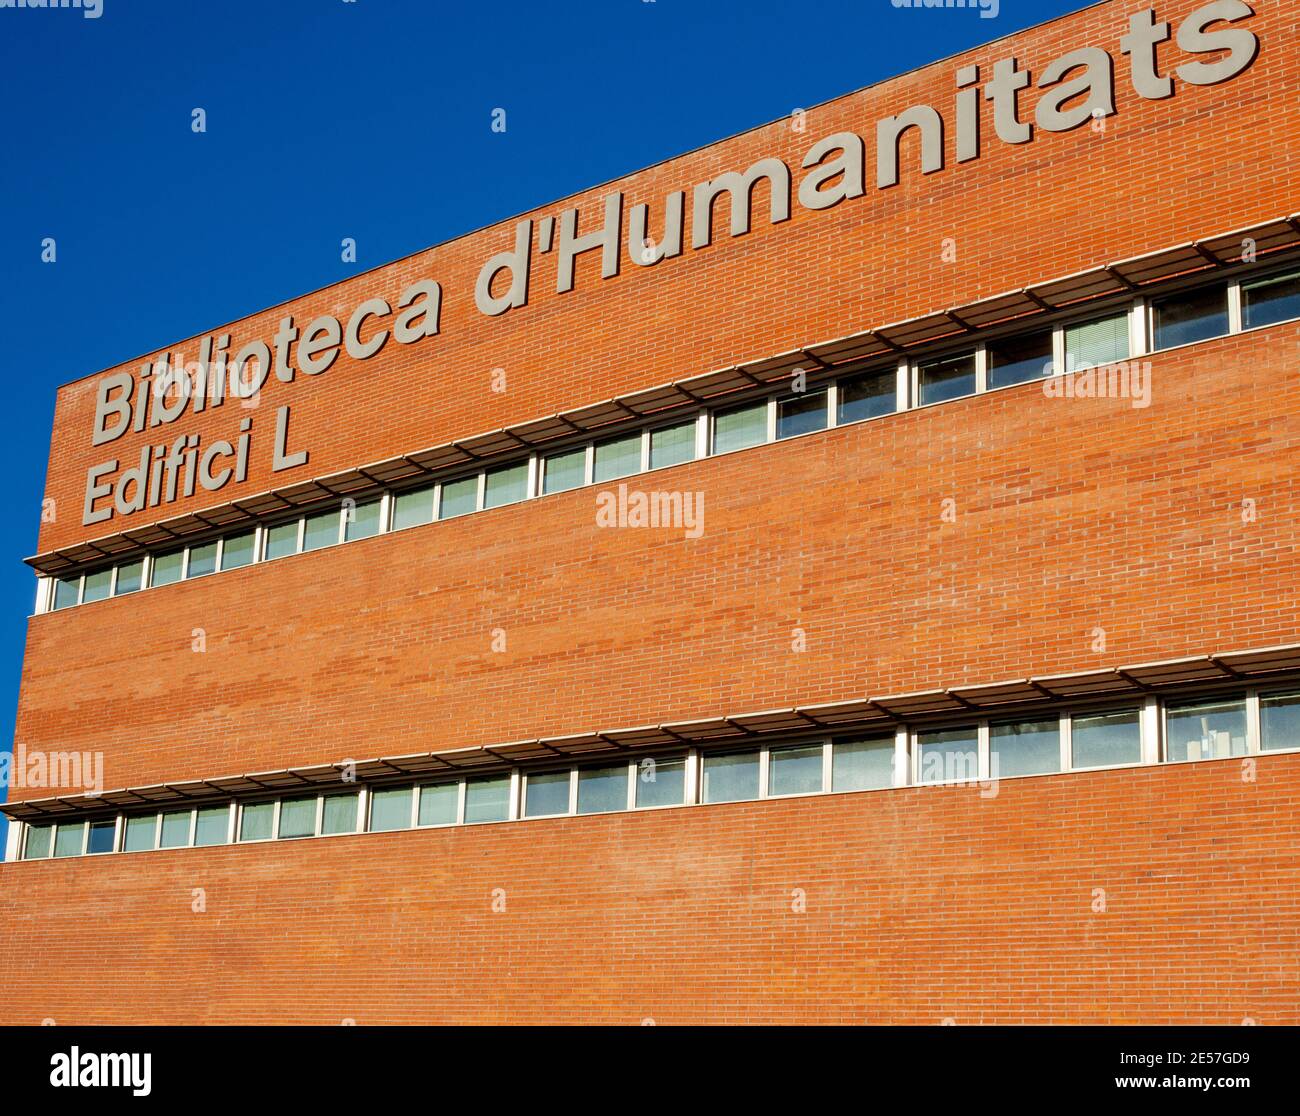 Missionary somersault Habubu Humanities Library (Biblioteca d'Humanitats) L Building (Edific L) of the  UAB (Universitat Autonoma de Barcelona) University of Barcelona, Spain  Stock Photo - Alamy